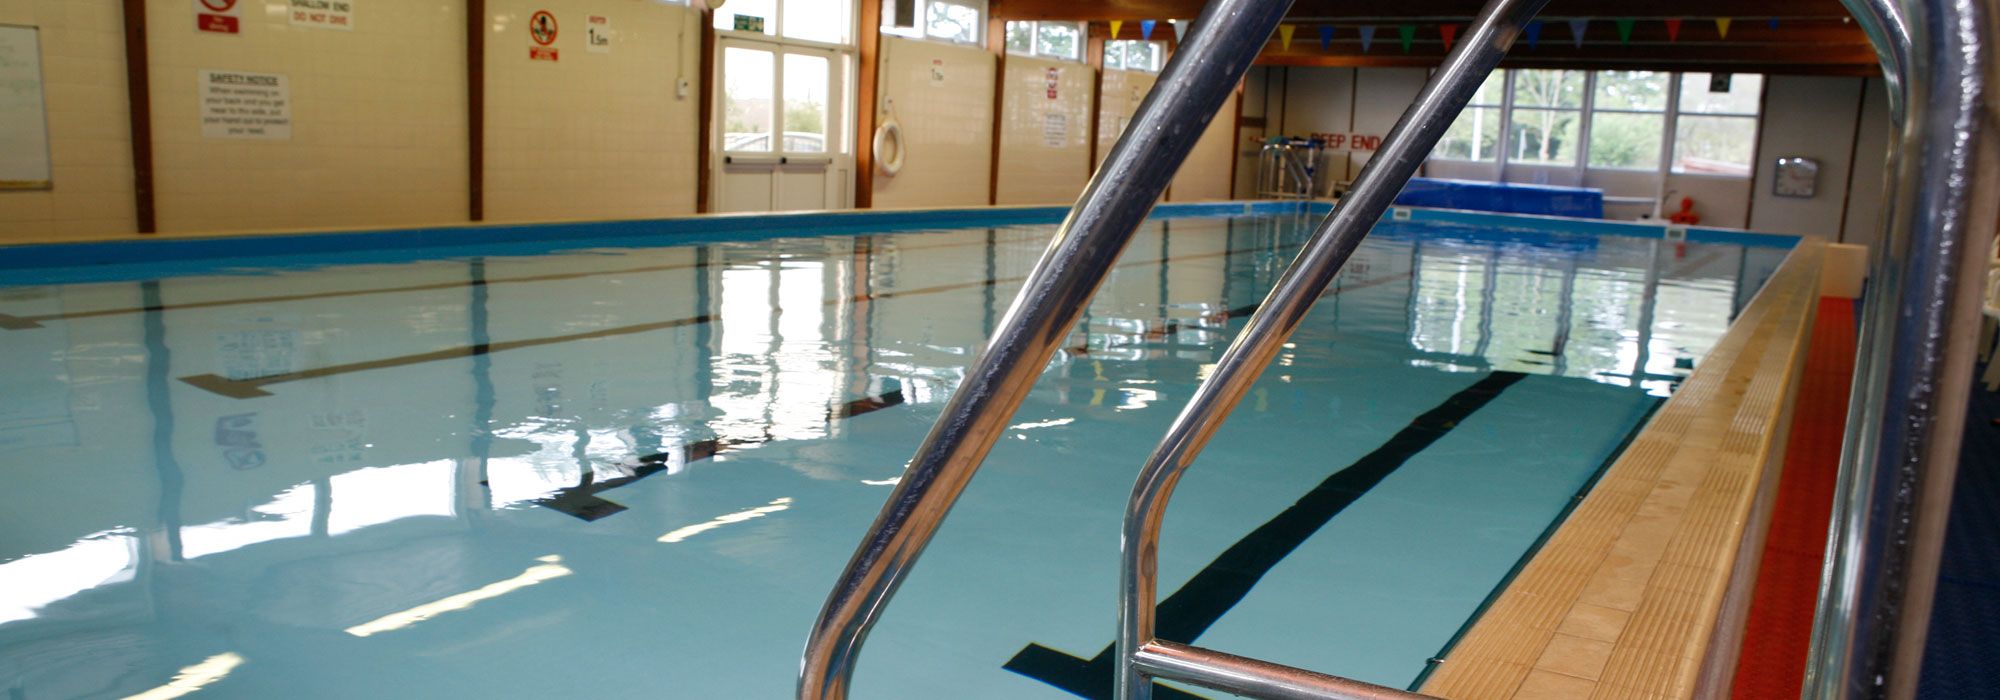 Swimming pool in Penley, Wrexham